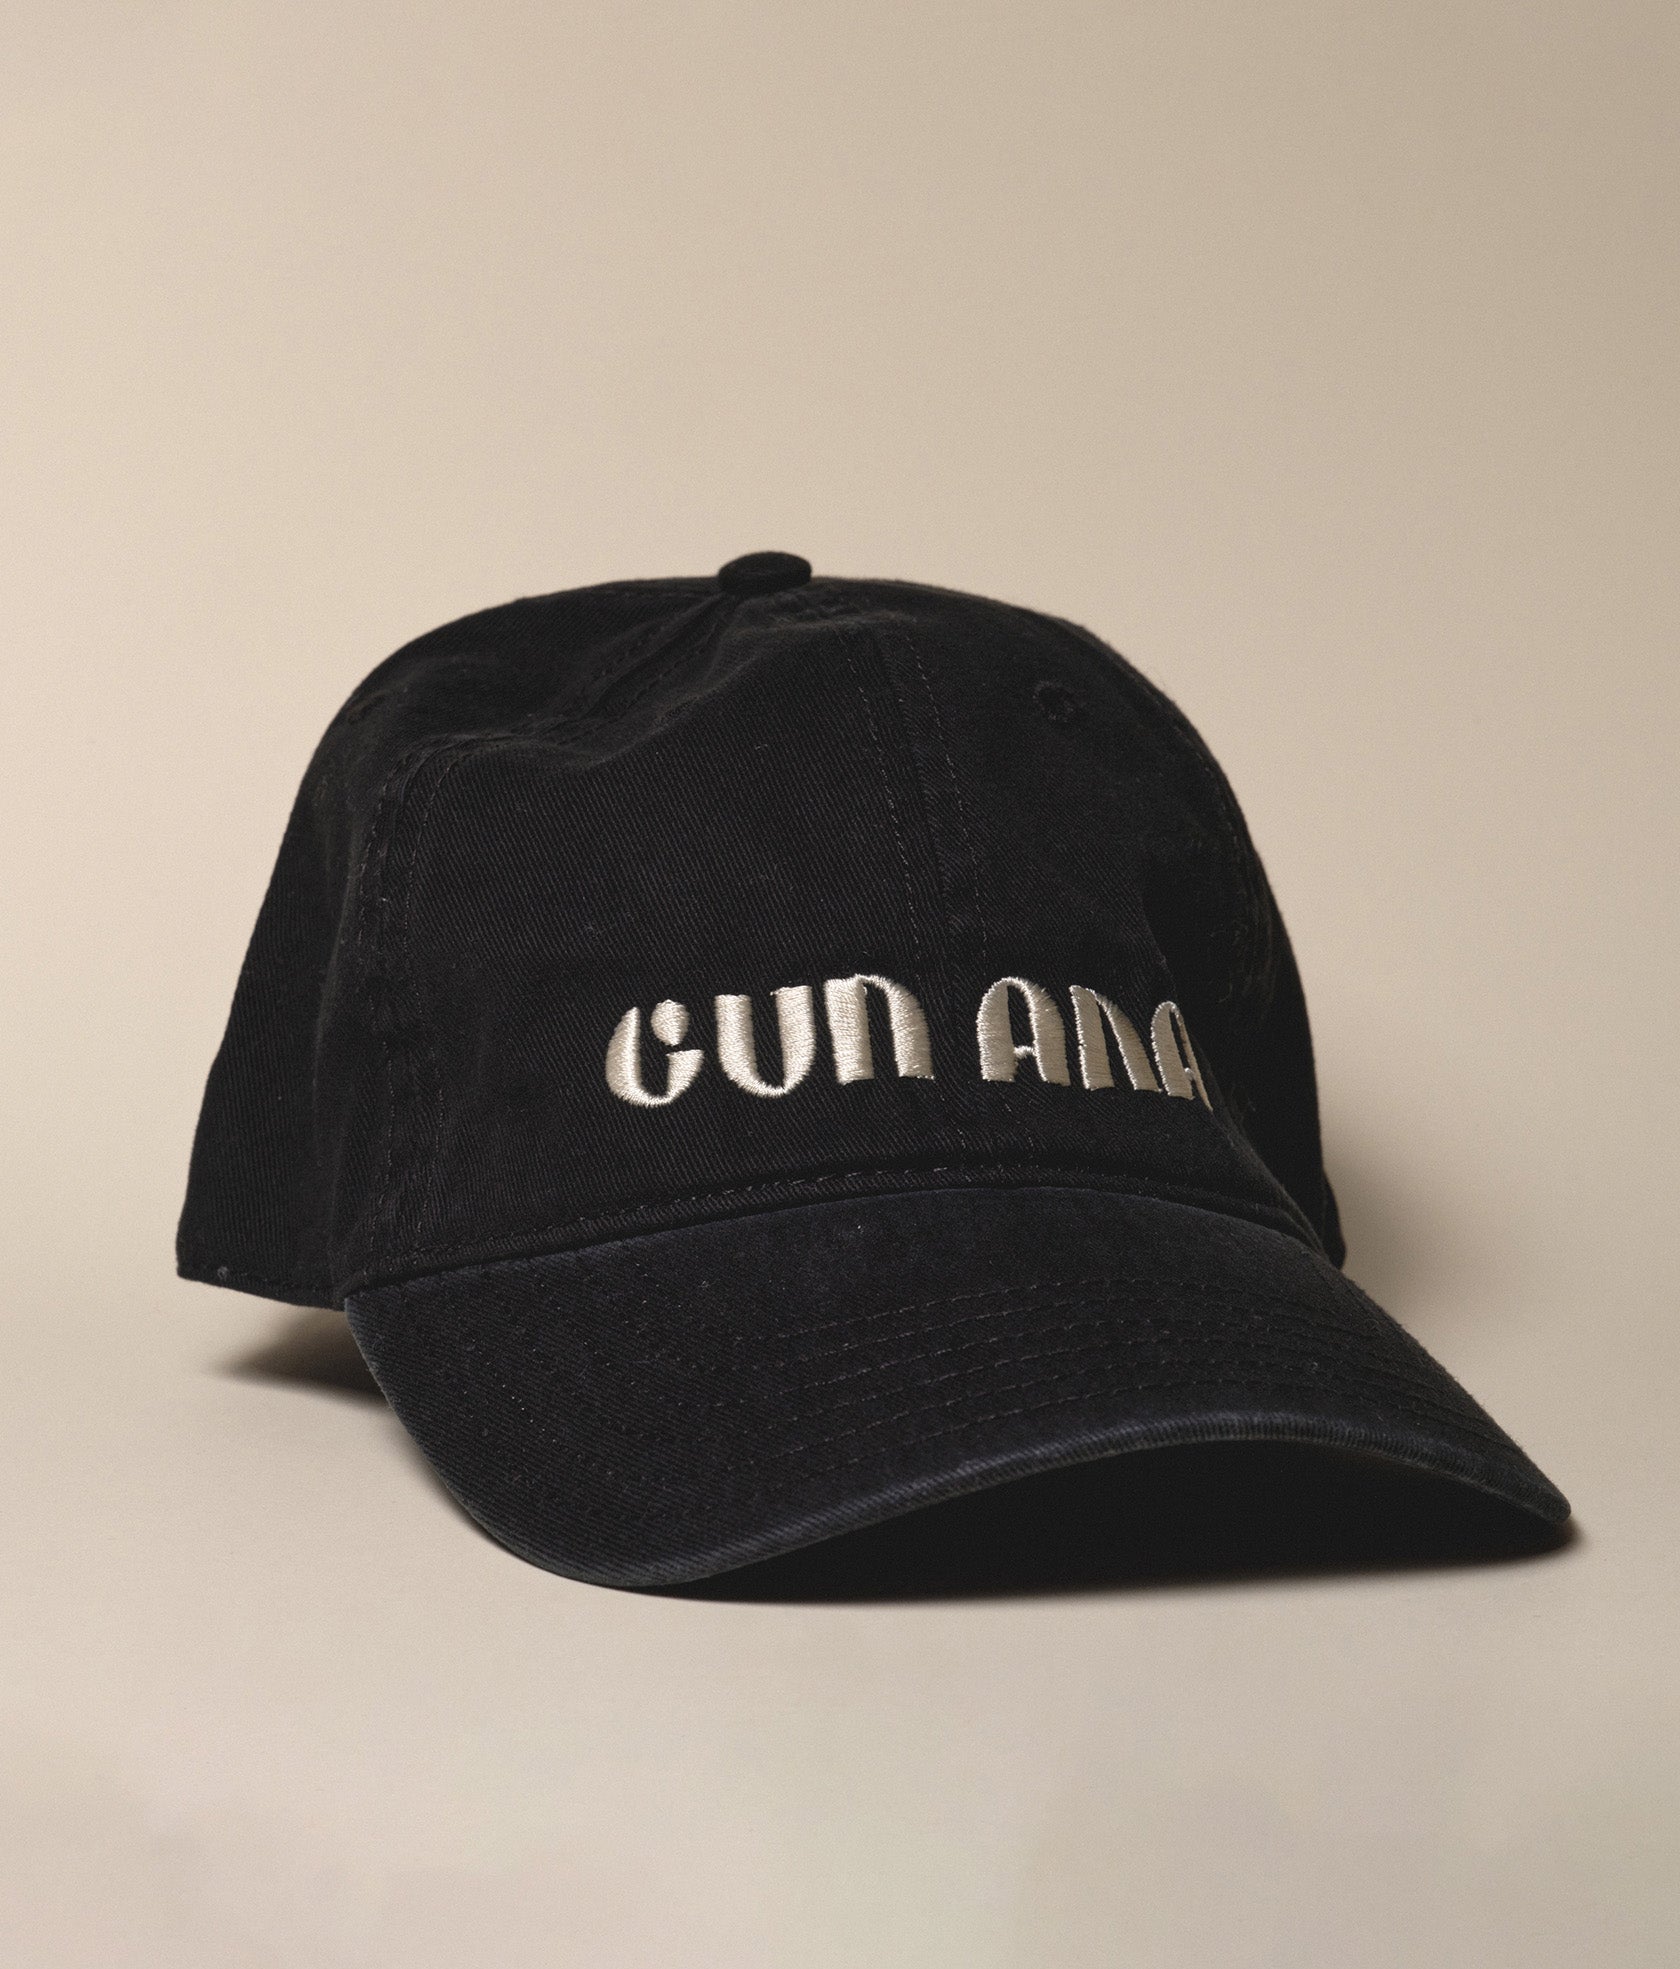 GUN ANA CAP - Gun Ana